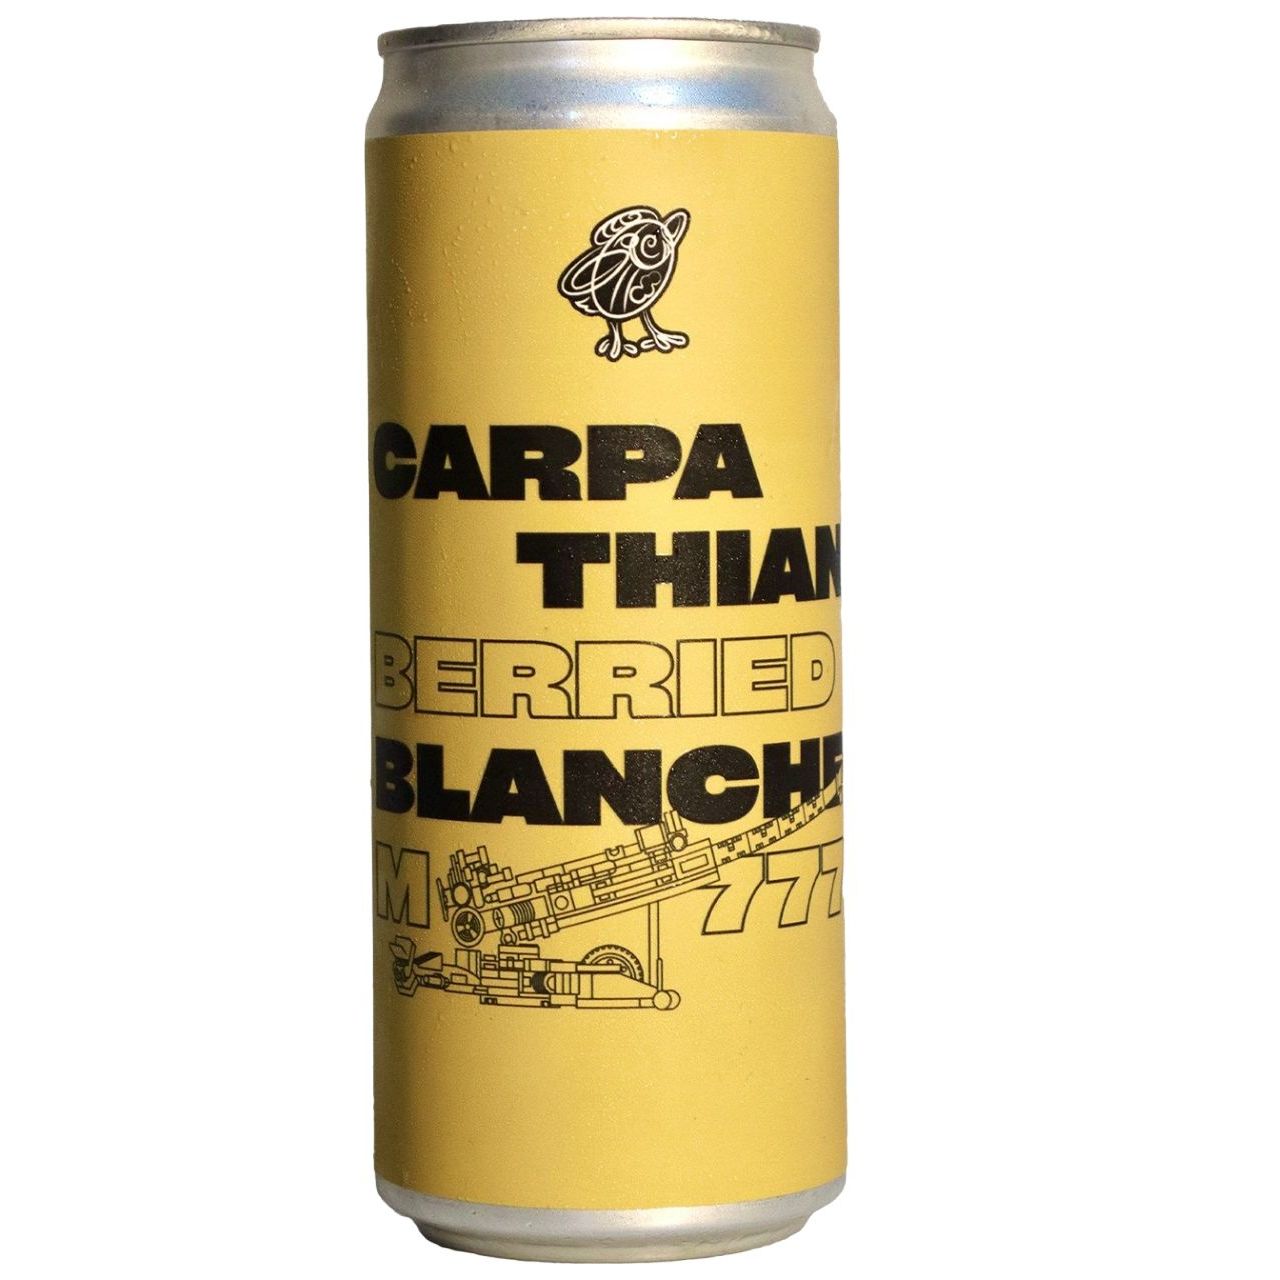 Пиво Ципа Carpathian Berried Blanche M777, светлое, нефильтрованное, 4,8%, ж/б, 0,33 л - фото 1